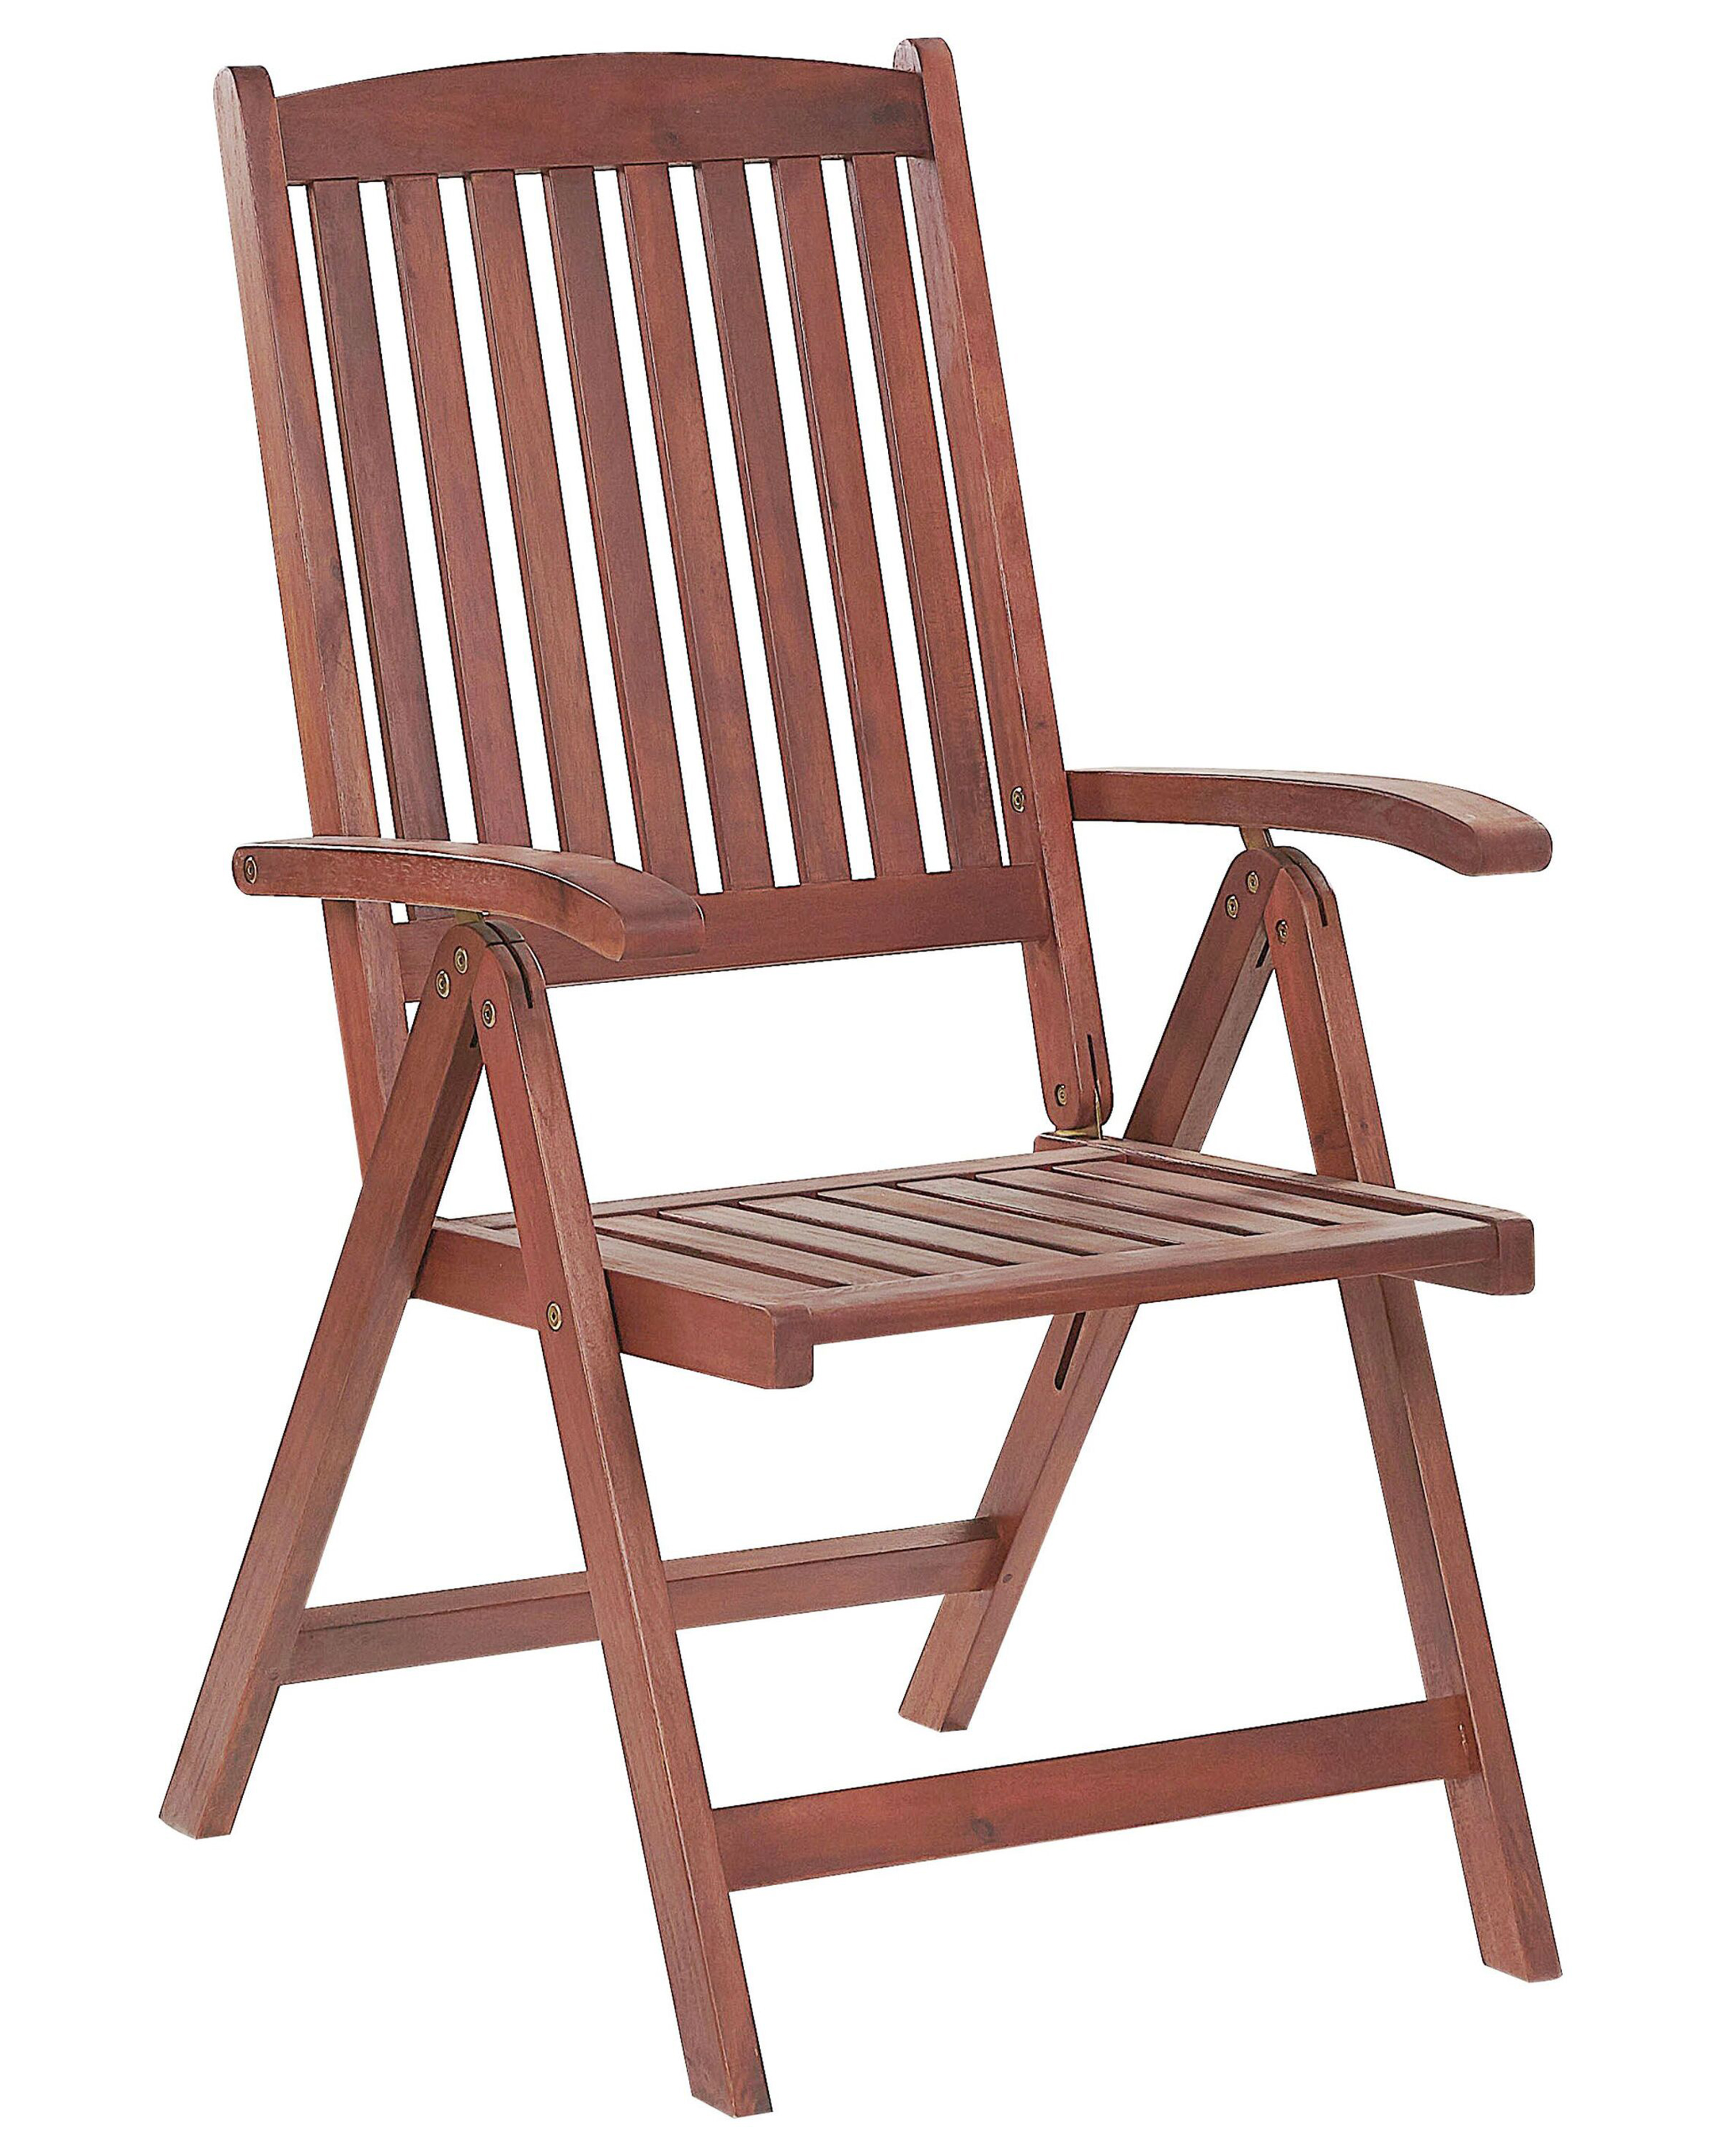 Sada 6 zahradních židlí z akátového dřeva s terakotovými polštáři TOSCANA_784181